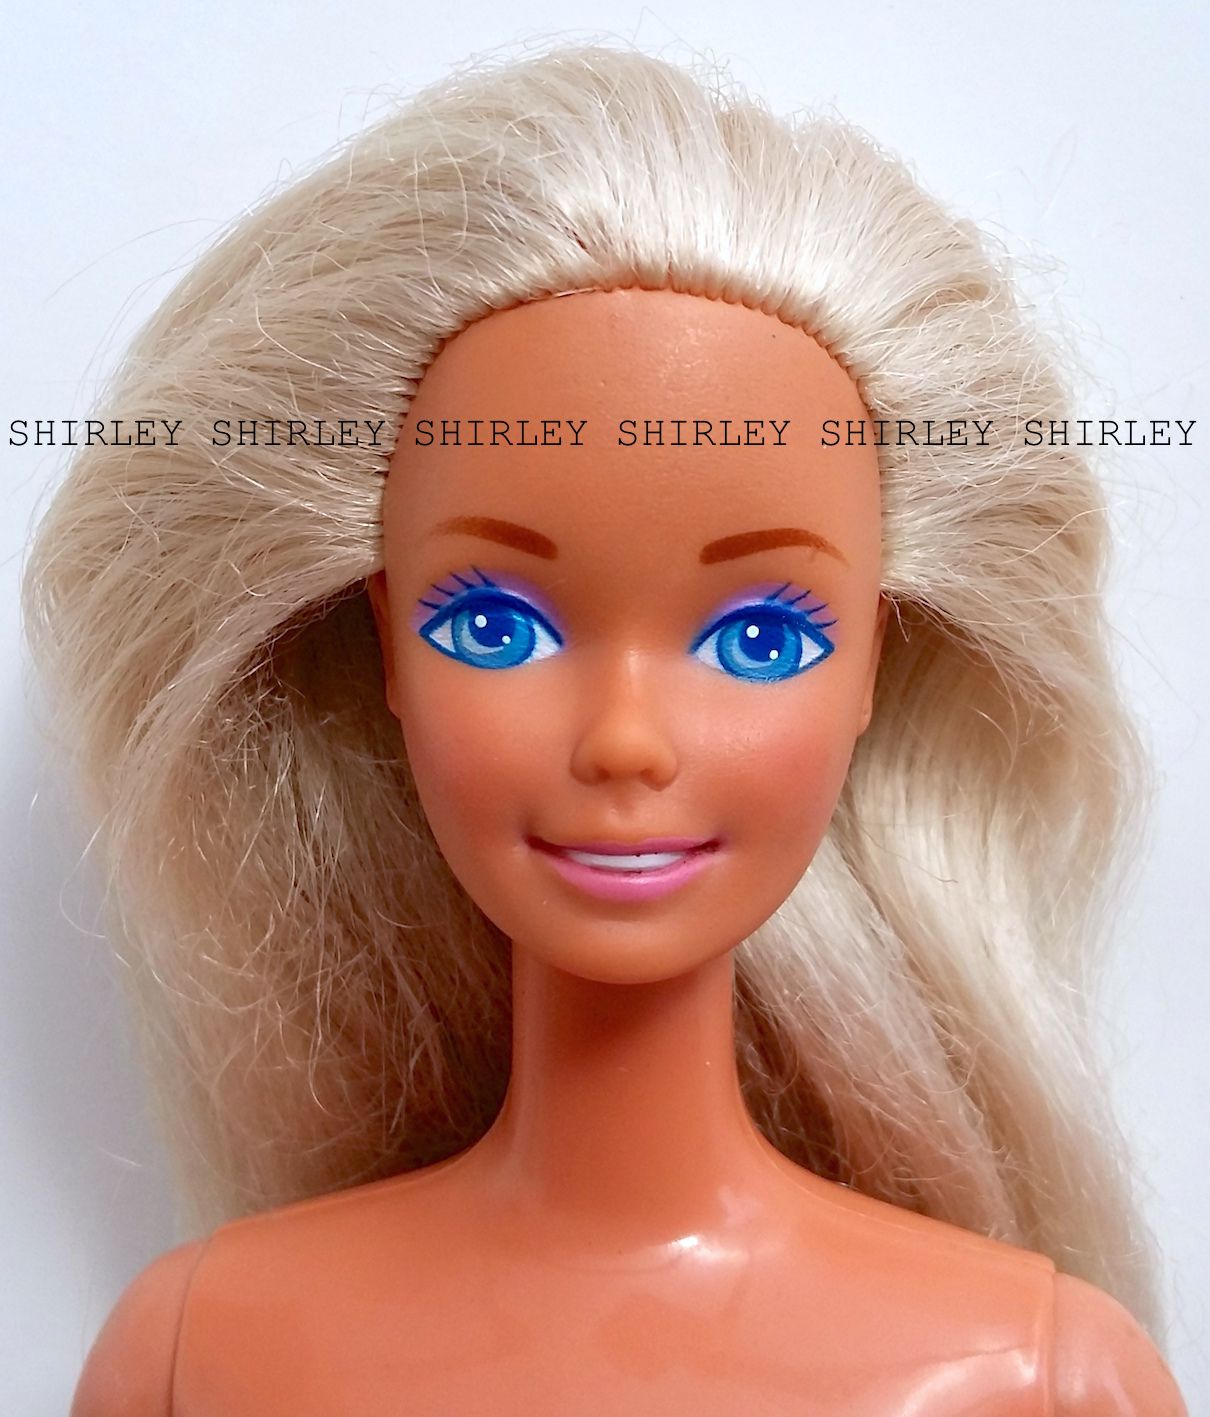 1992 BARBIE DOLLS - Barbie doll identification